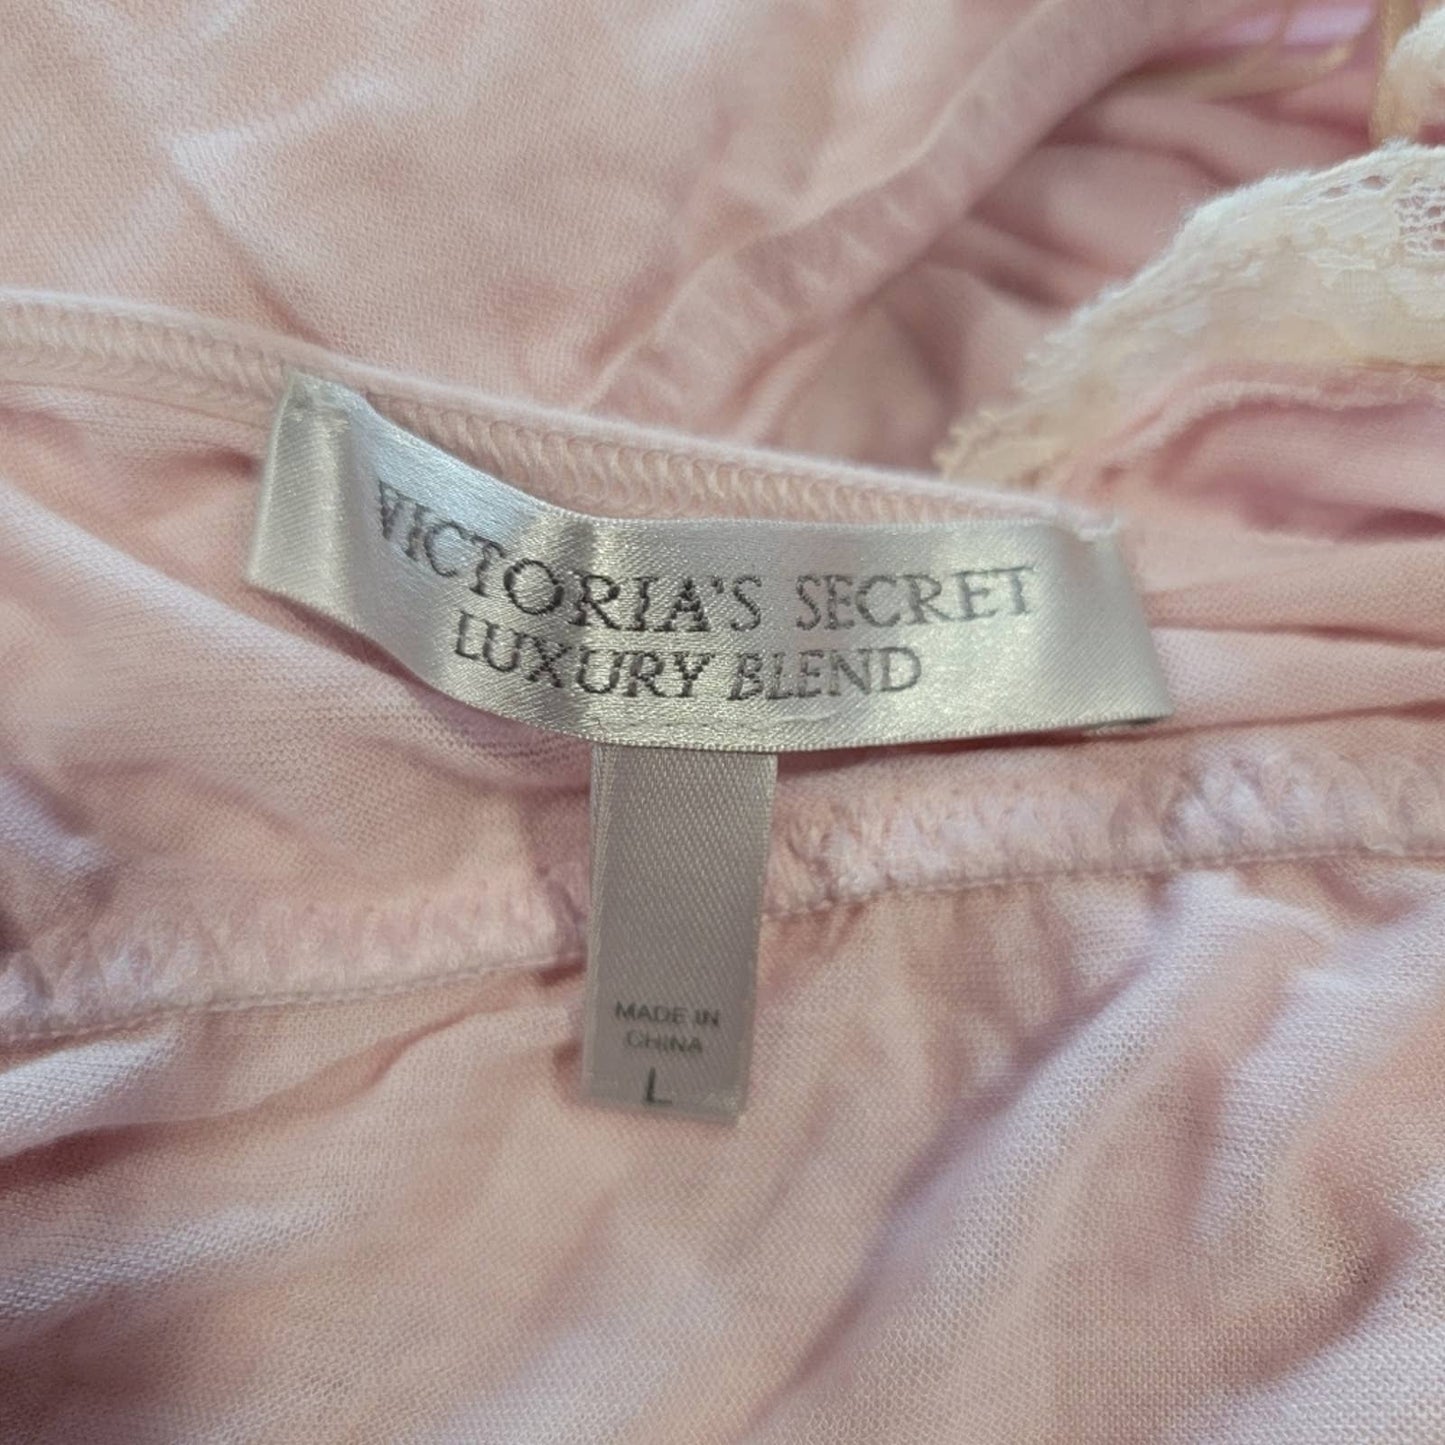 Victorias Secret Luxury Blend Babydoll Nightgown - L